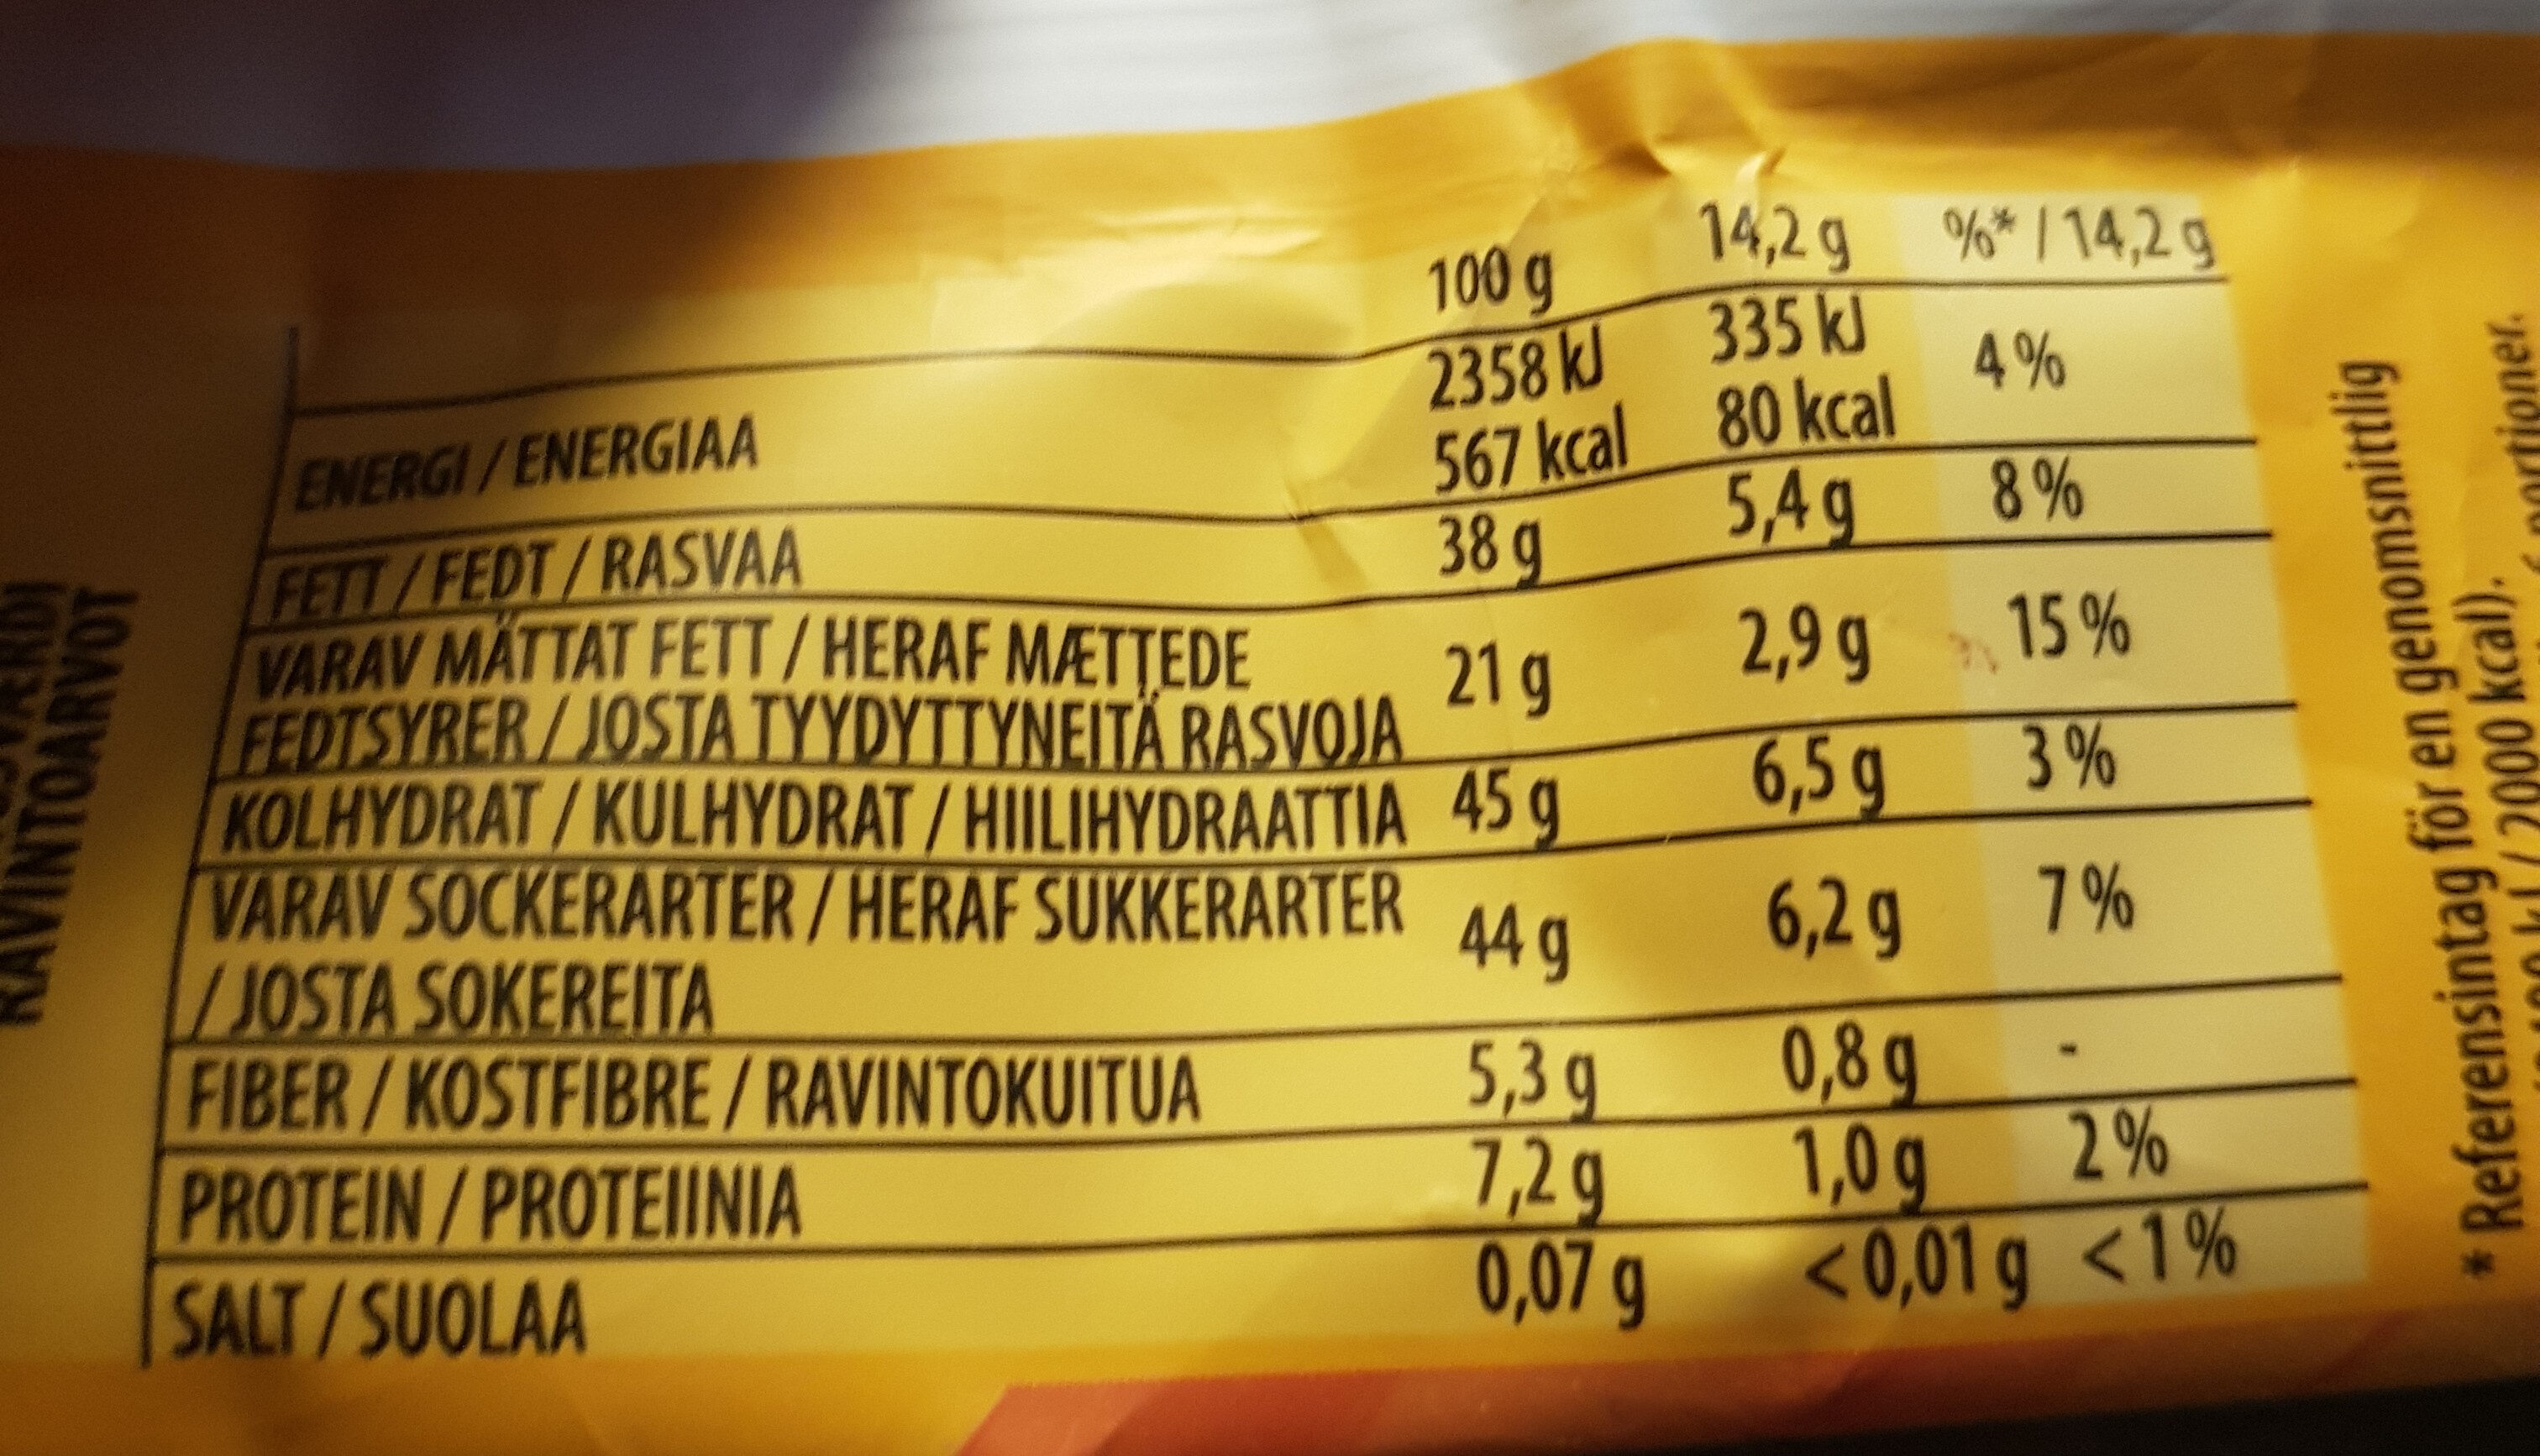 Marabou Darkmilk Chocolate Roasted Almonds - Ravintosisältö - fi